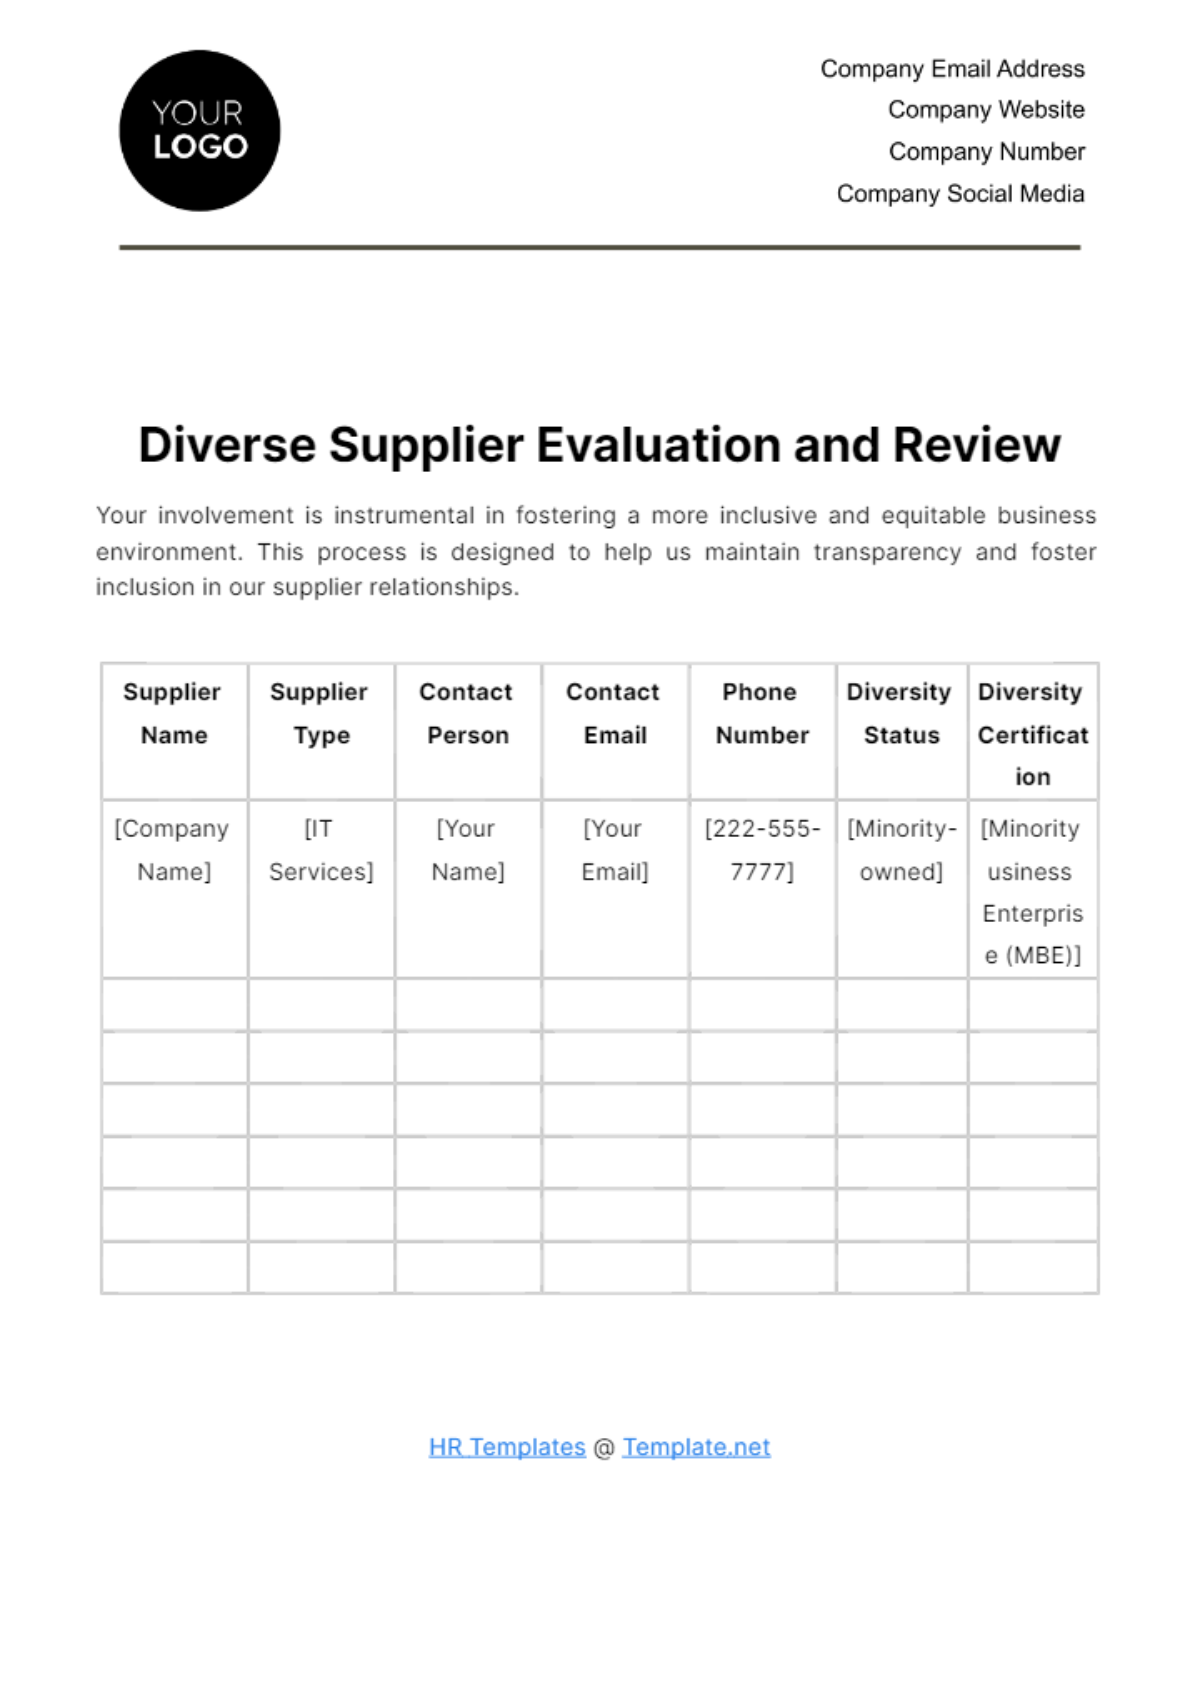 Diverse Supplier Review HR Template